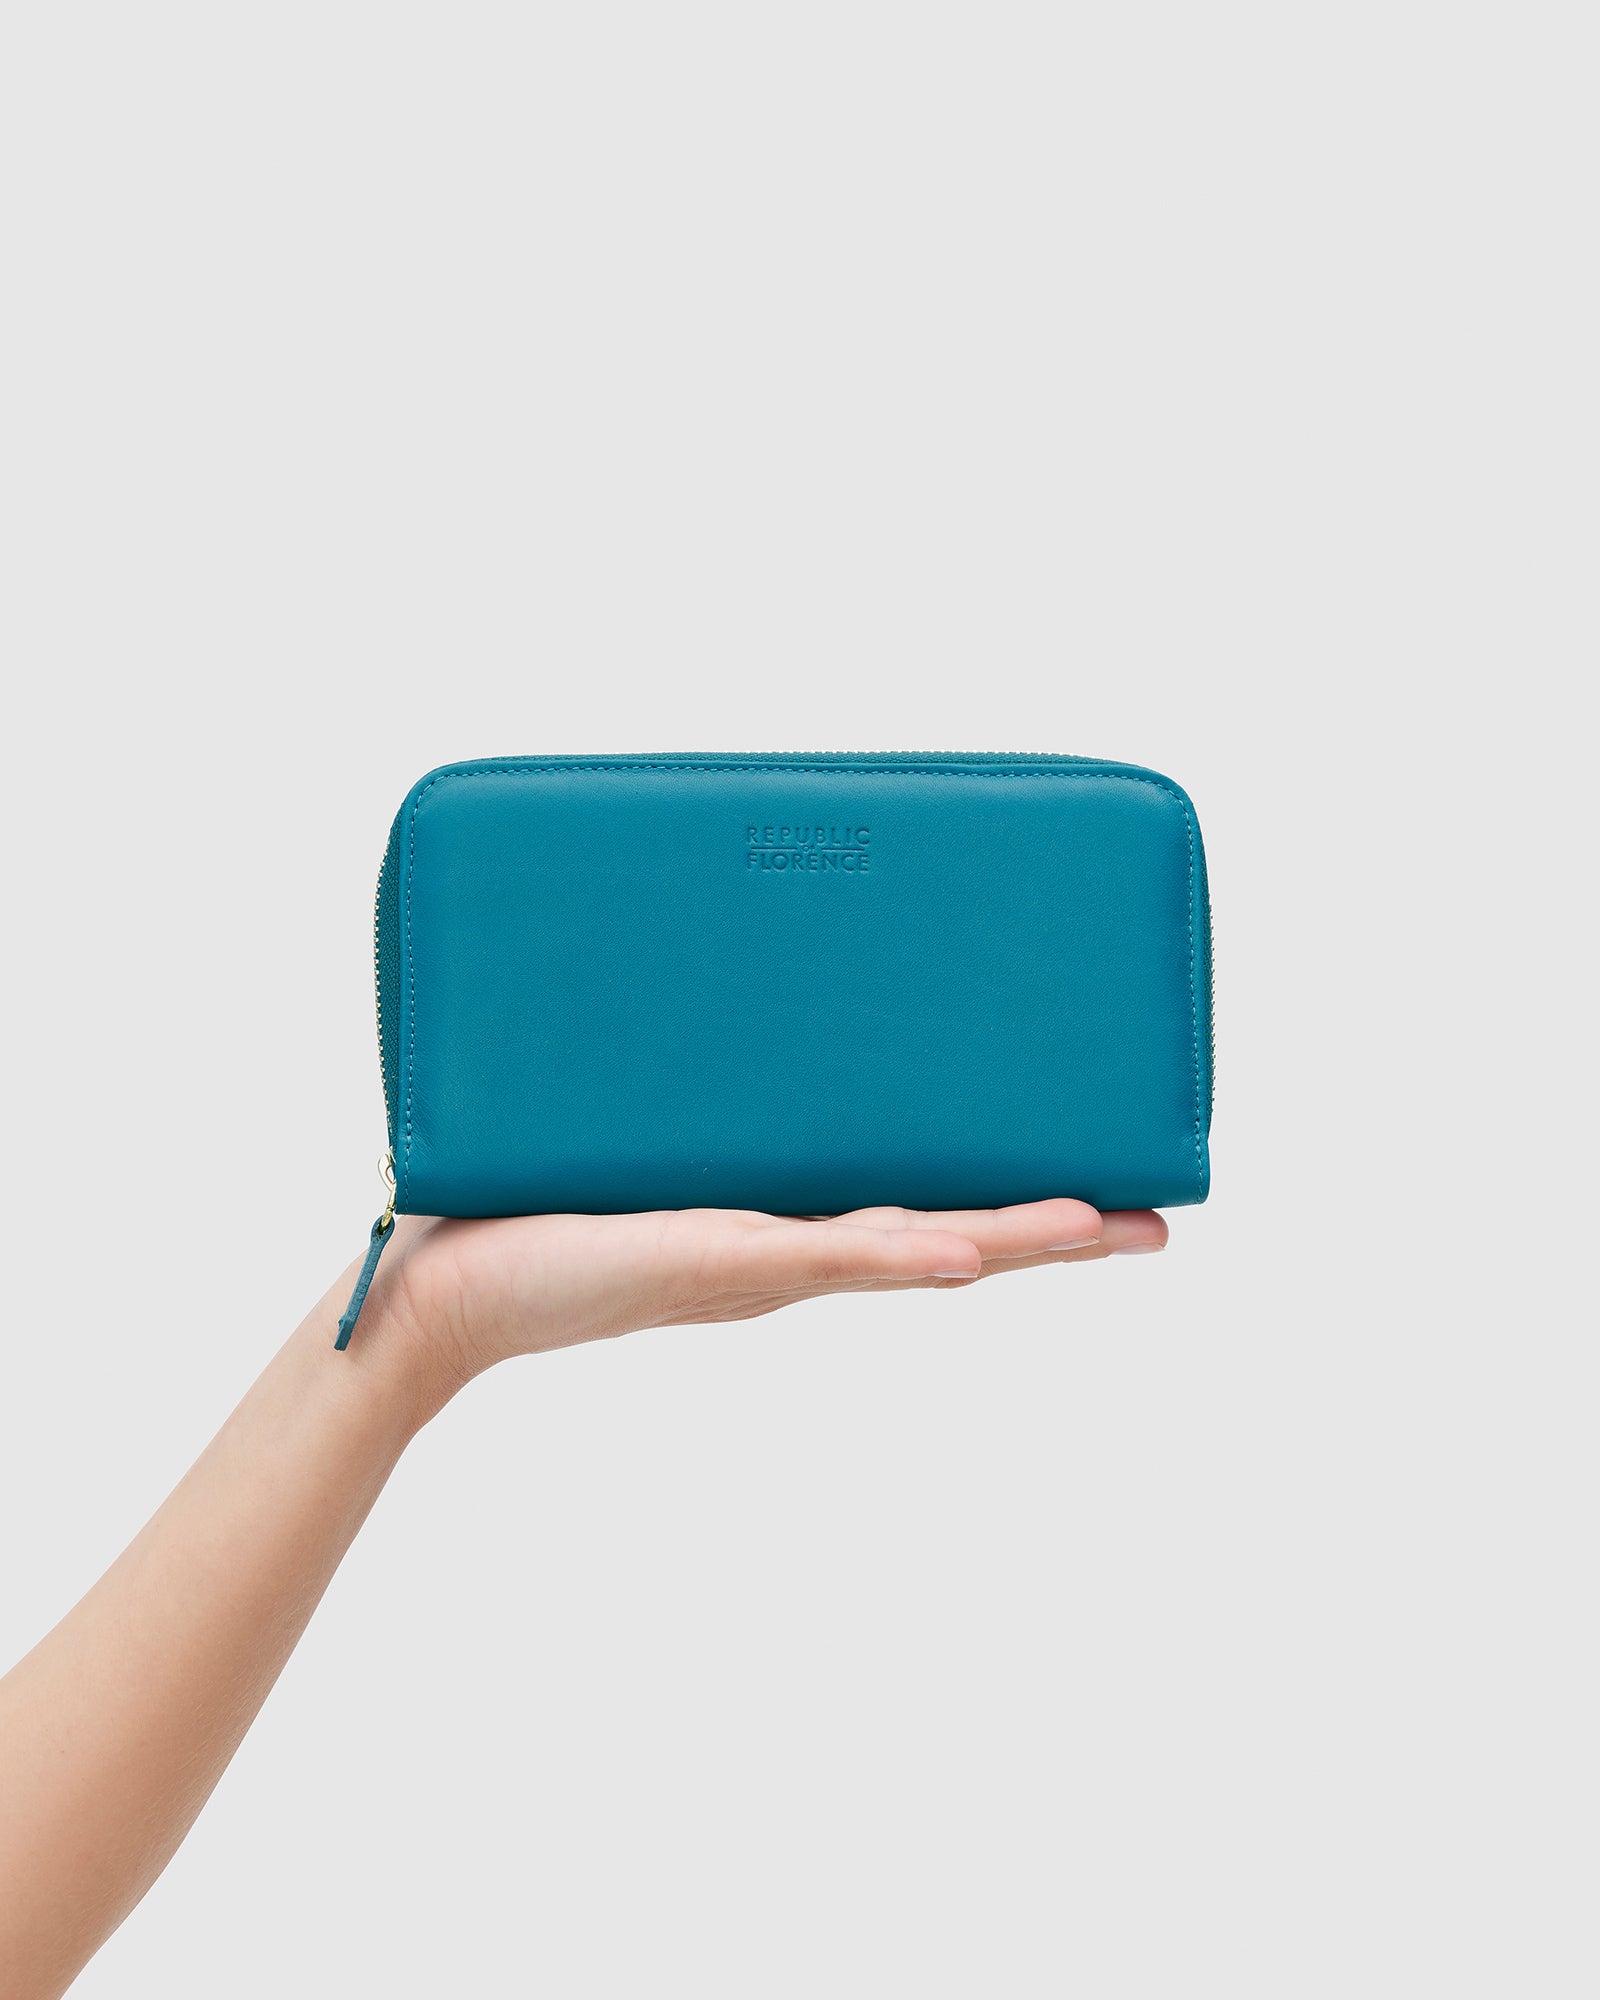 Mimi Turquoise - Women Leather Wallet